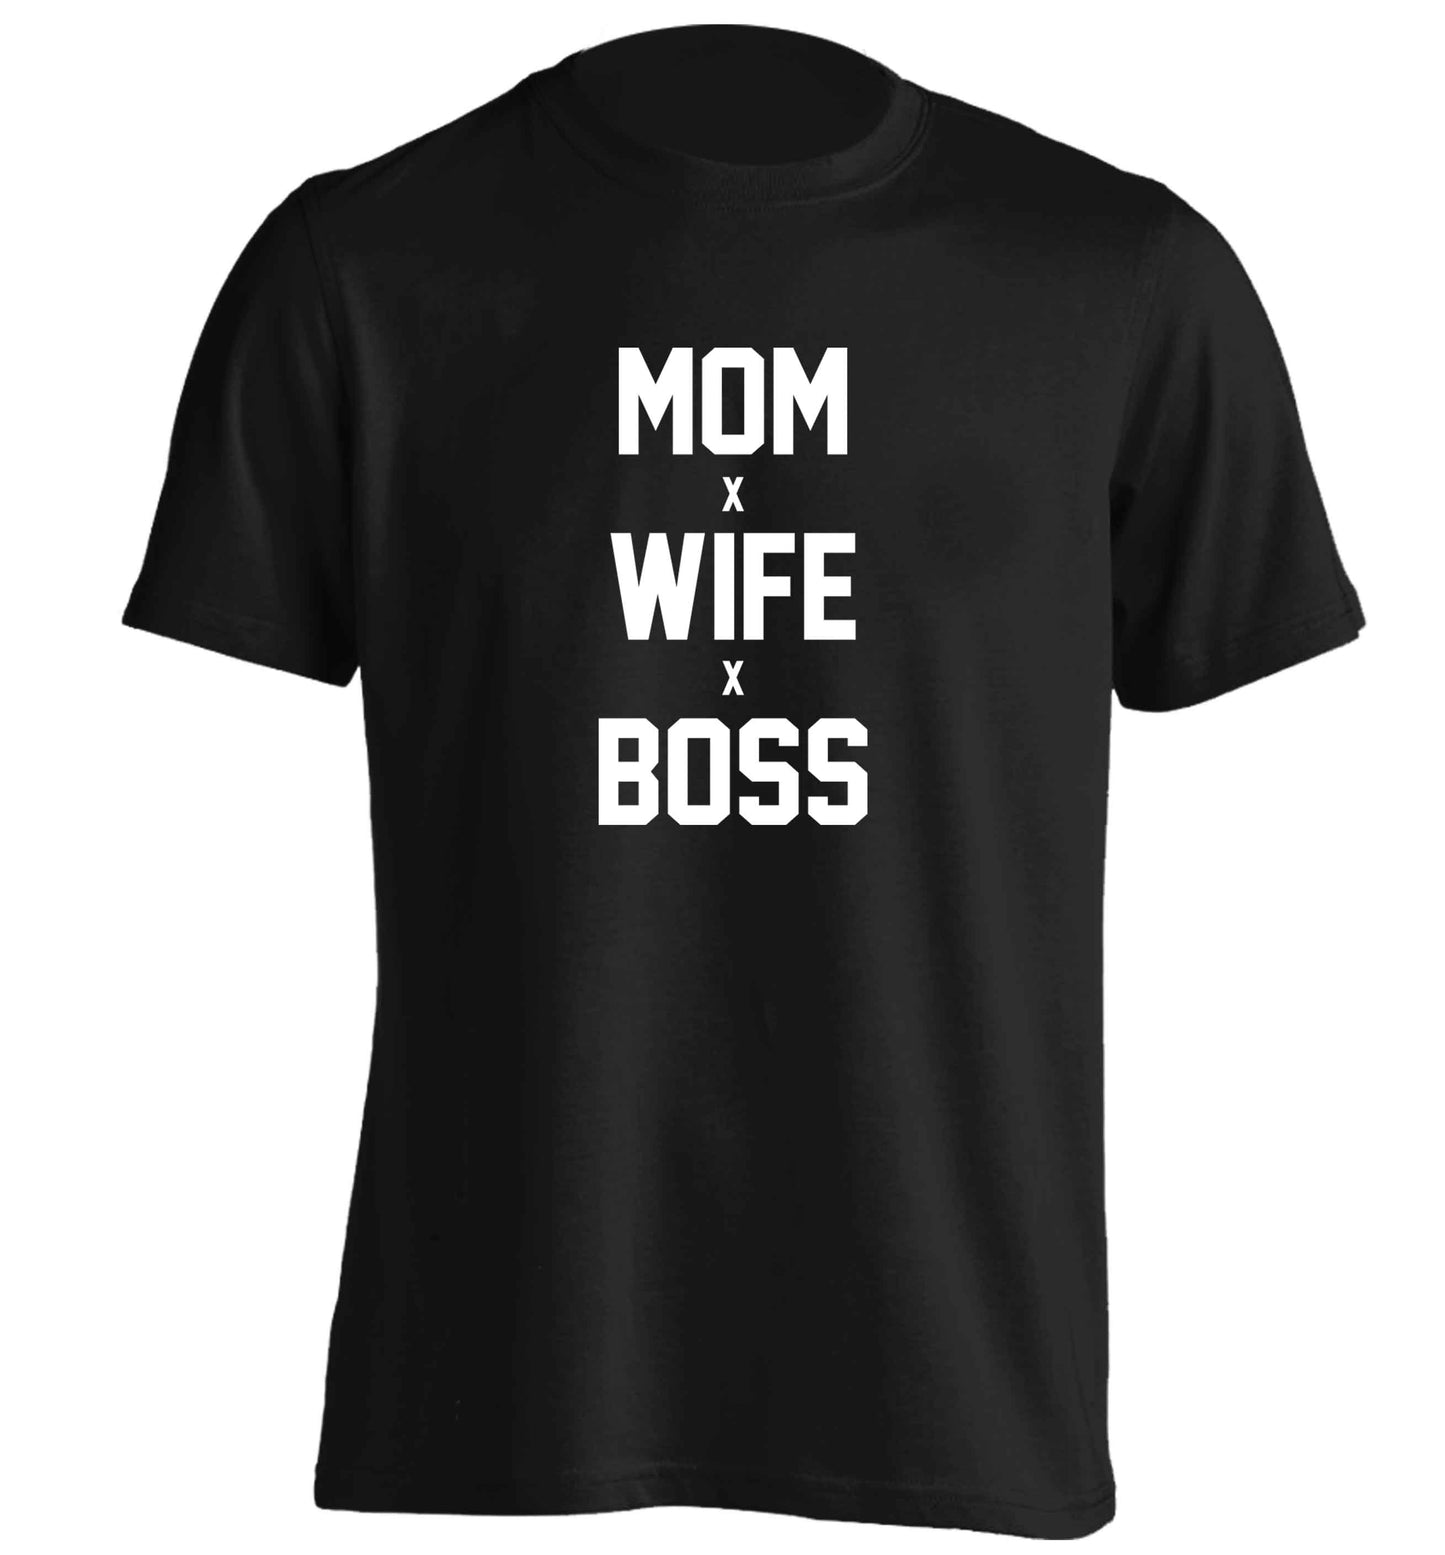 Mum wife boss adults unisex black Tshirt 2XL